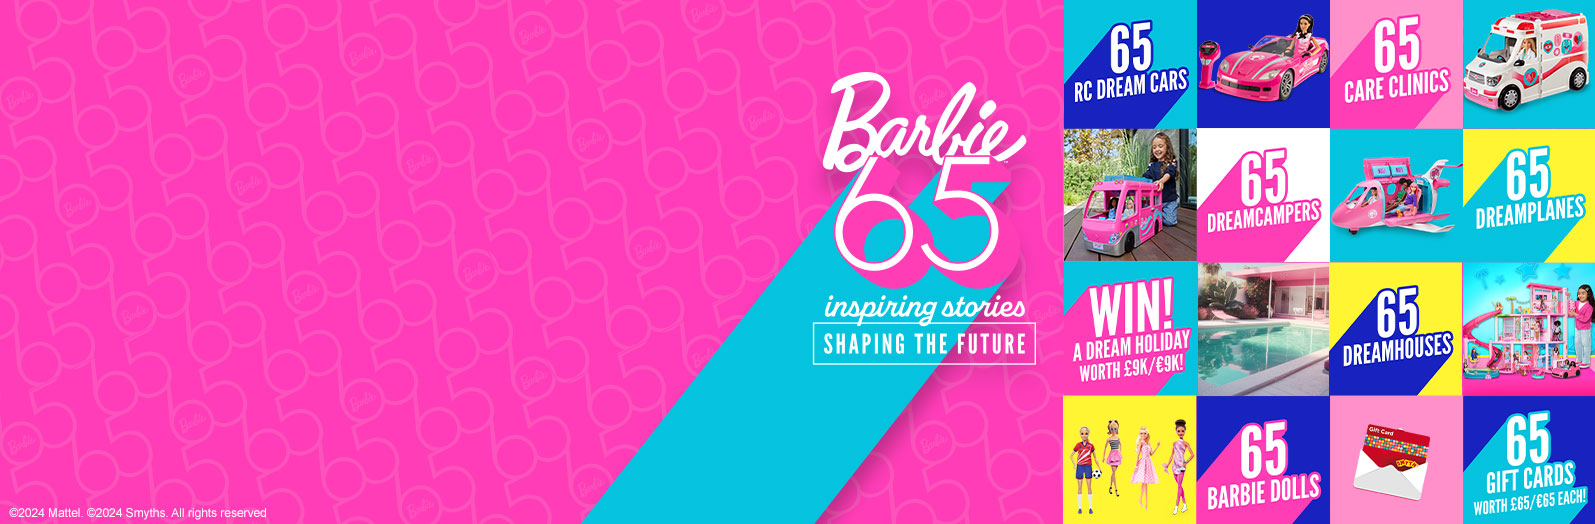 barbie 65th comp 02 24 ff3eb5